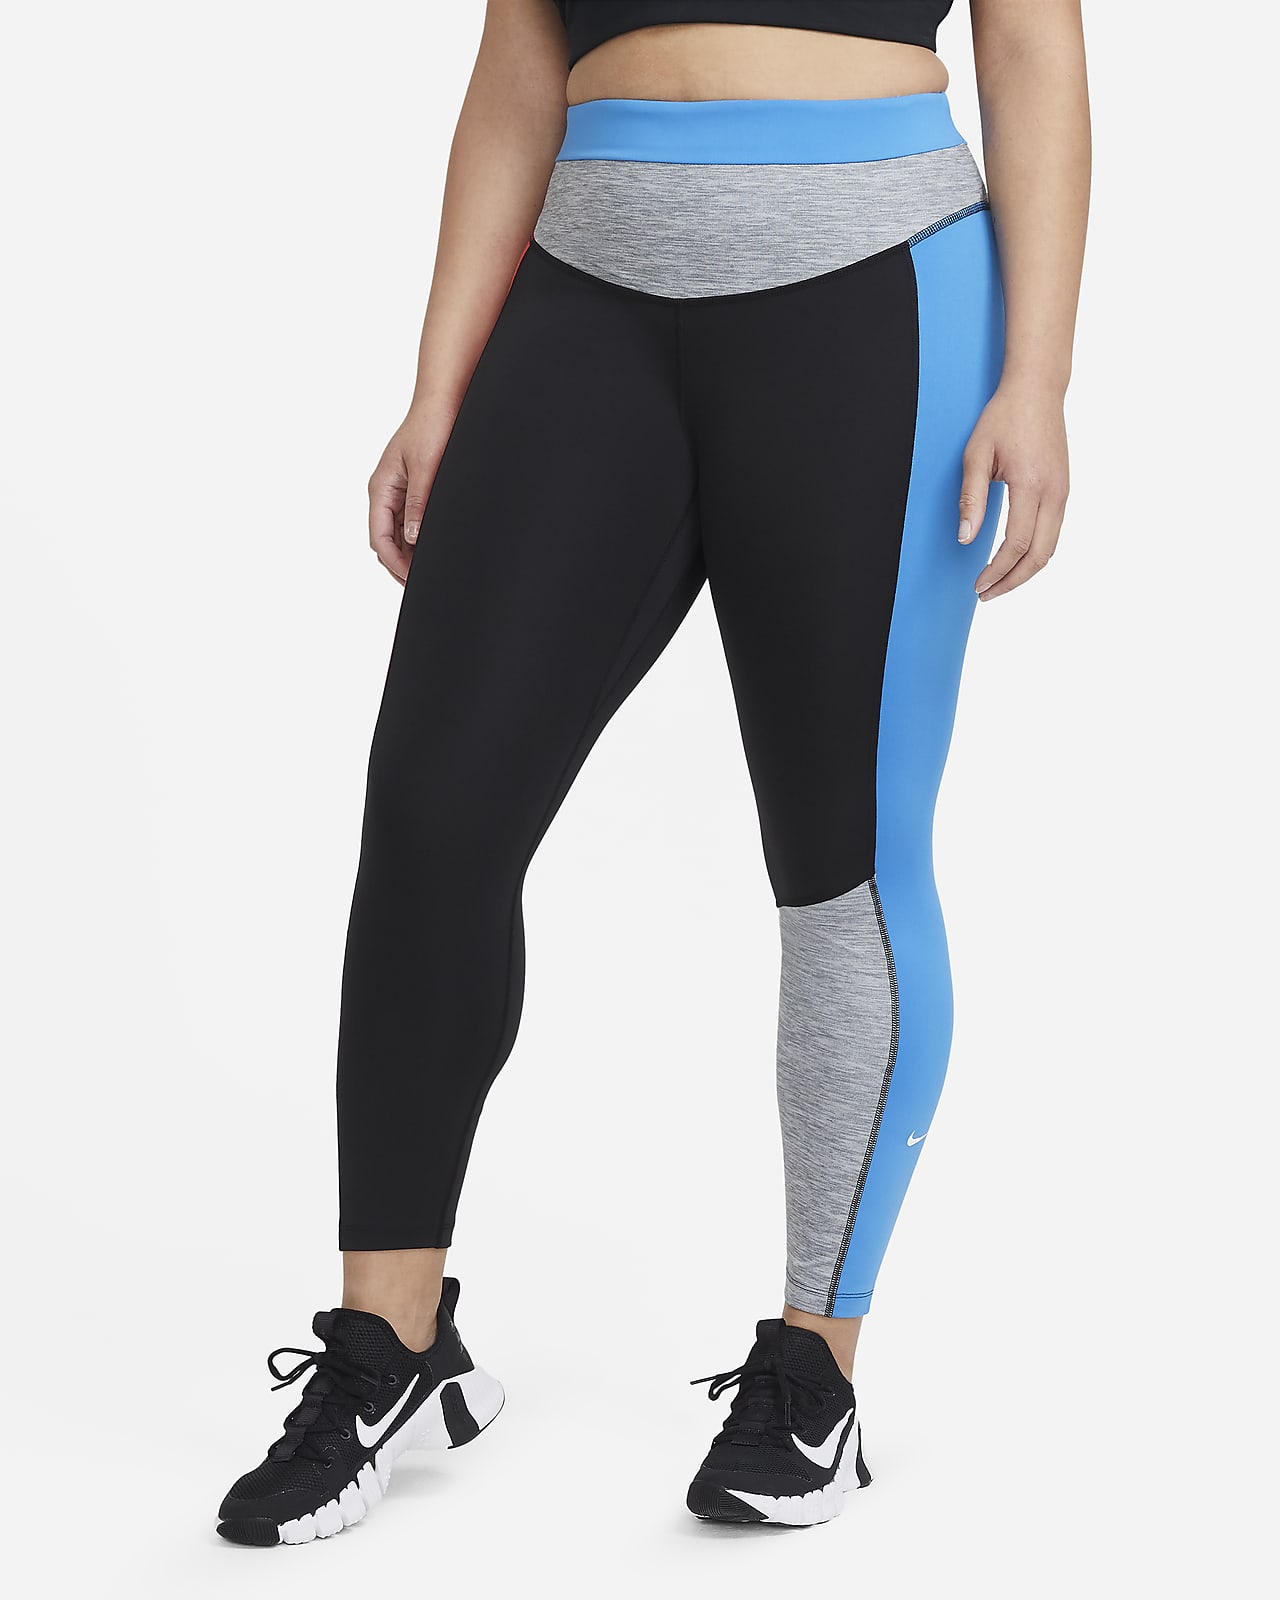 Nike One Women's Mid-RIse 7/8 Color-Block Leggings (Plus Size)